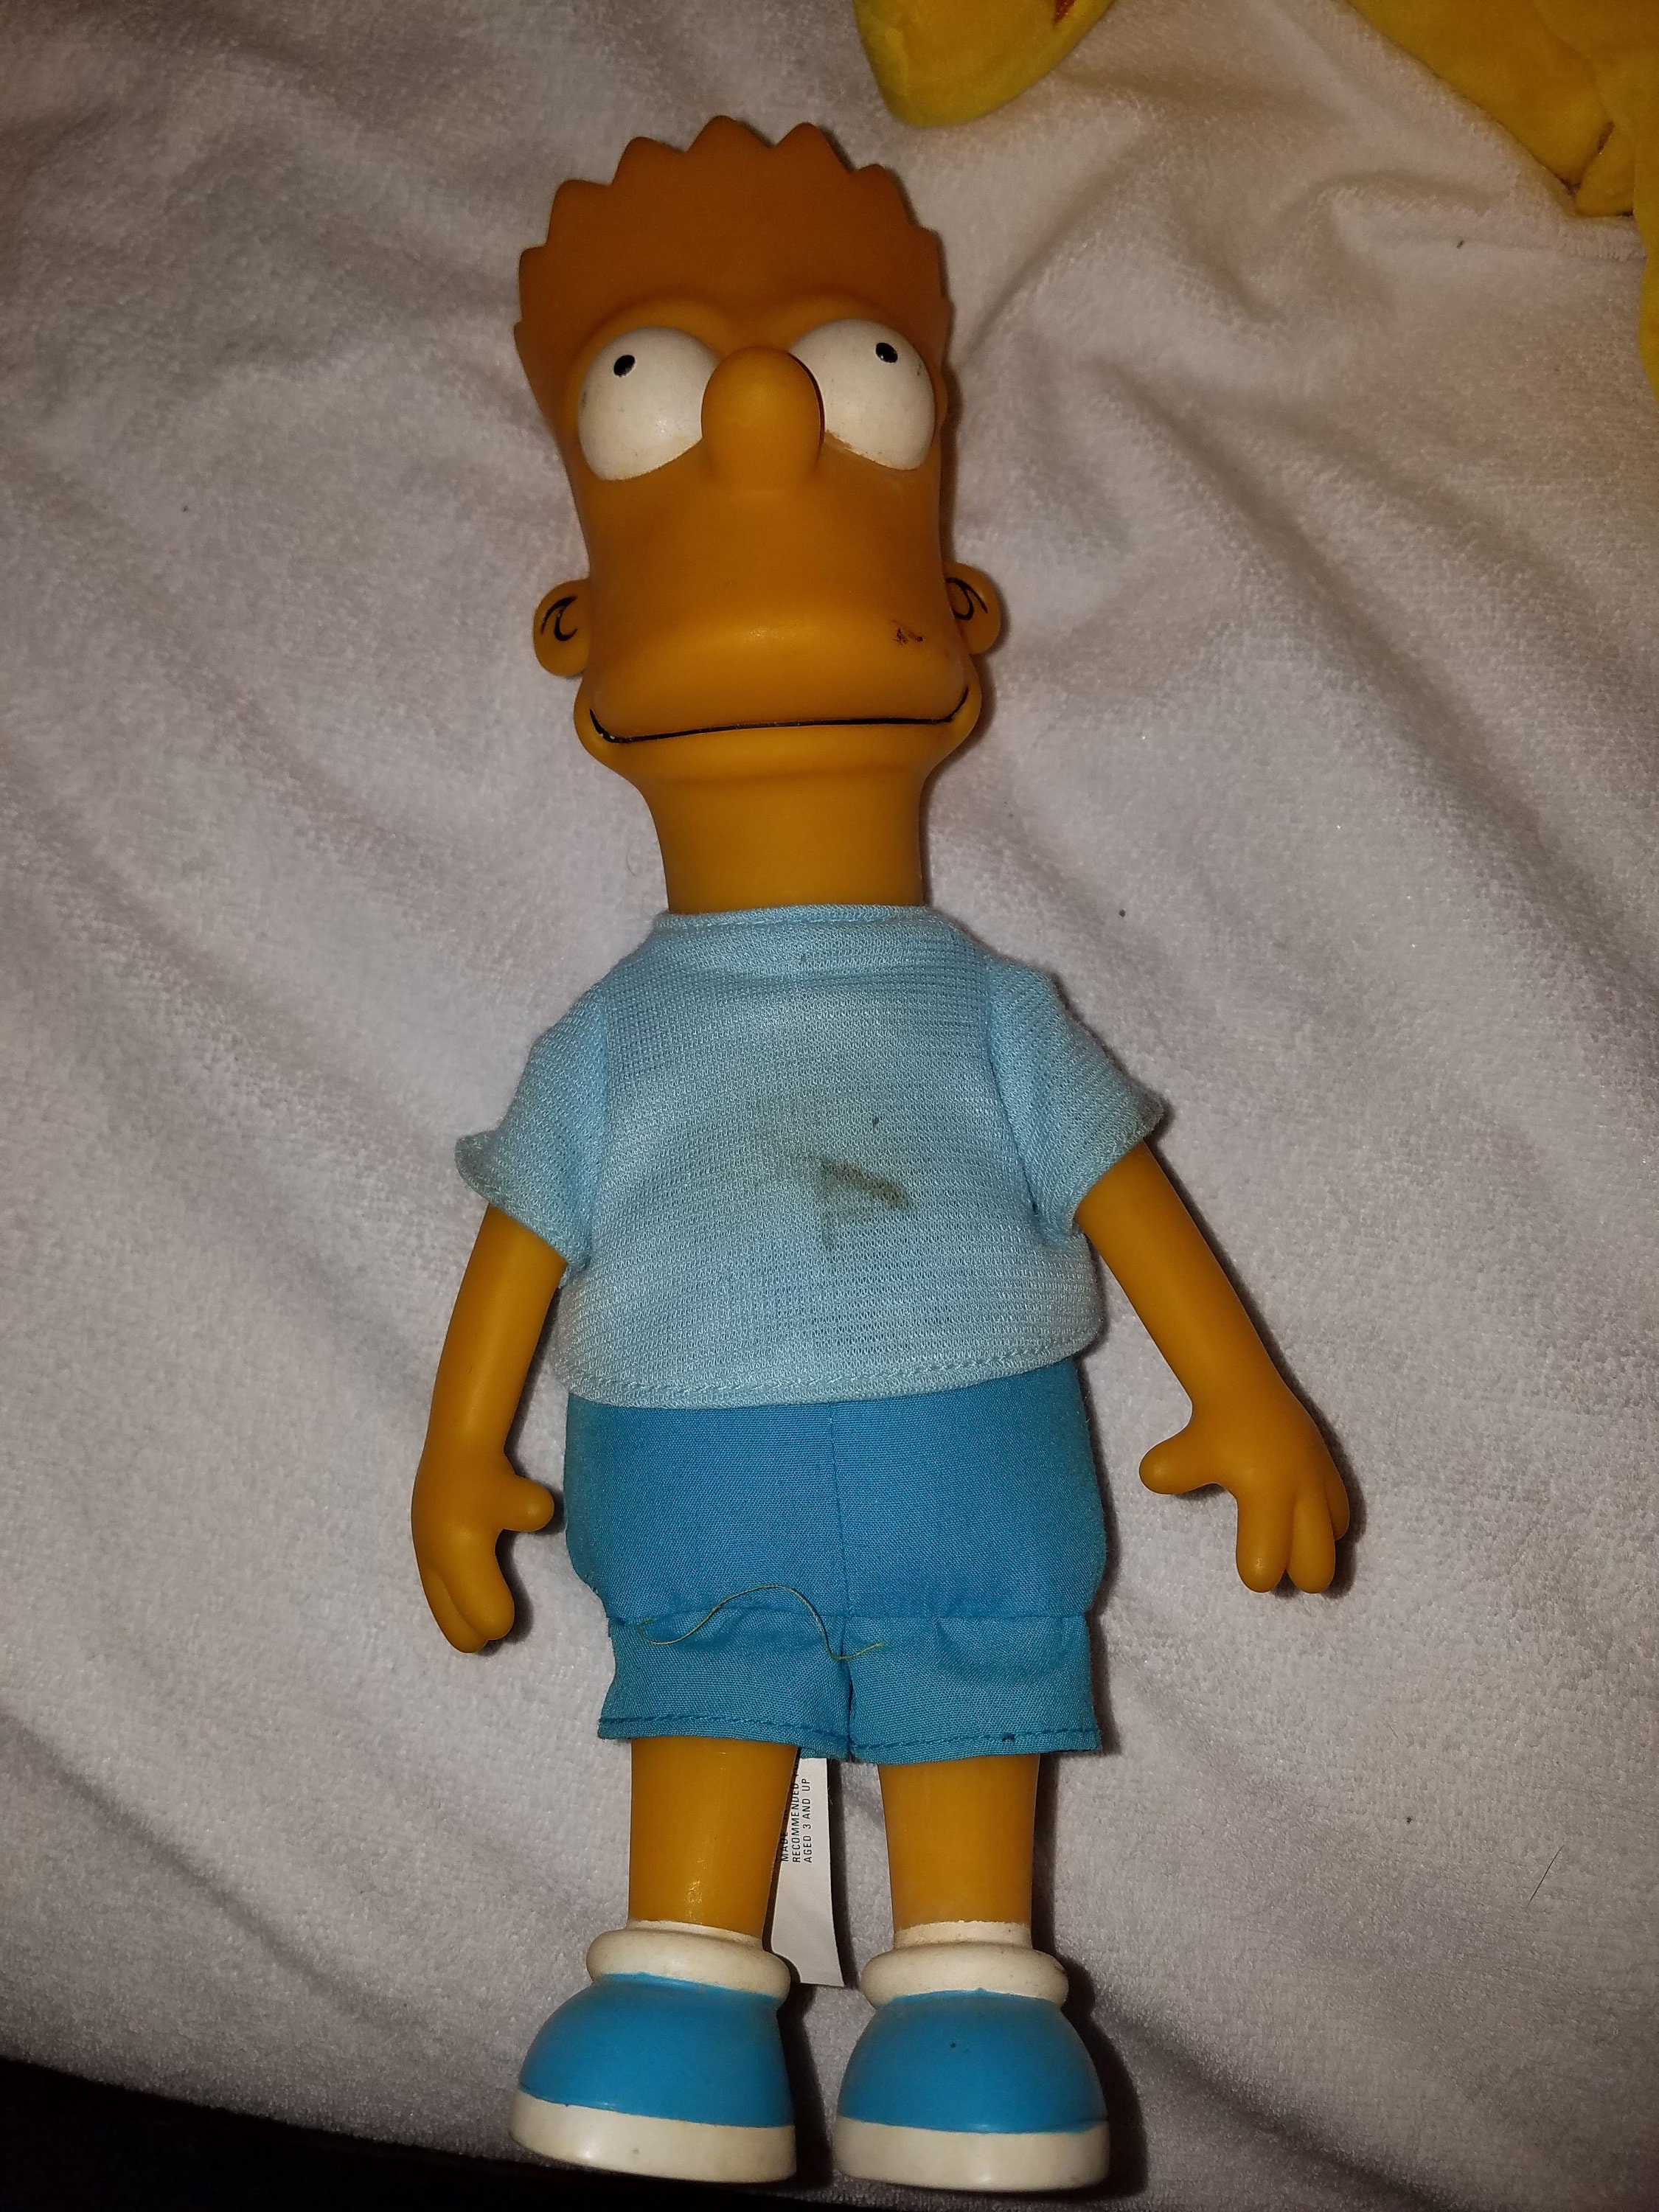 Bart Simpson Doll the Simpsons Cartoon Characters - Etsy Australia